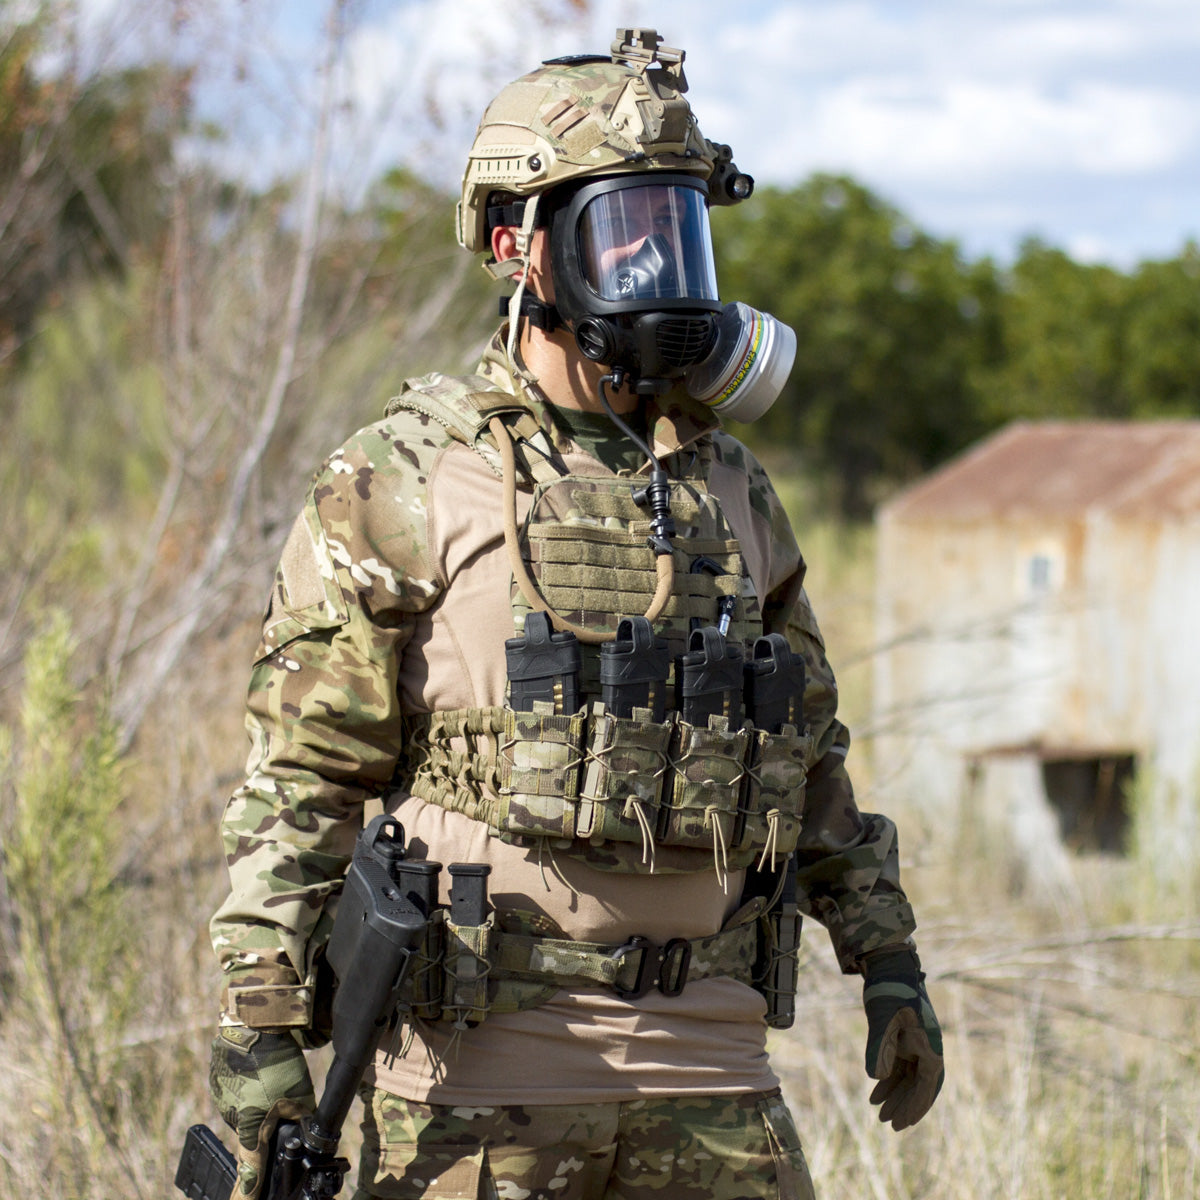 MIRA Safety CM-6M Tactical Gas Mask Full-Face Respirator for CBRN Defense Protective Gear MIRA Safety Tactical Gear Supplier Tactical Distributors Australia